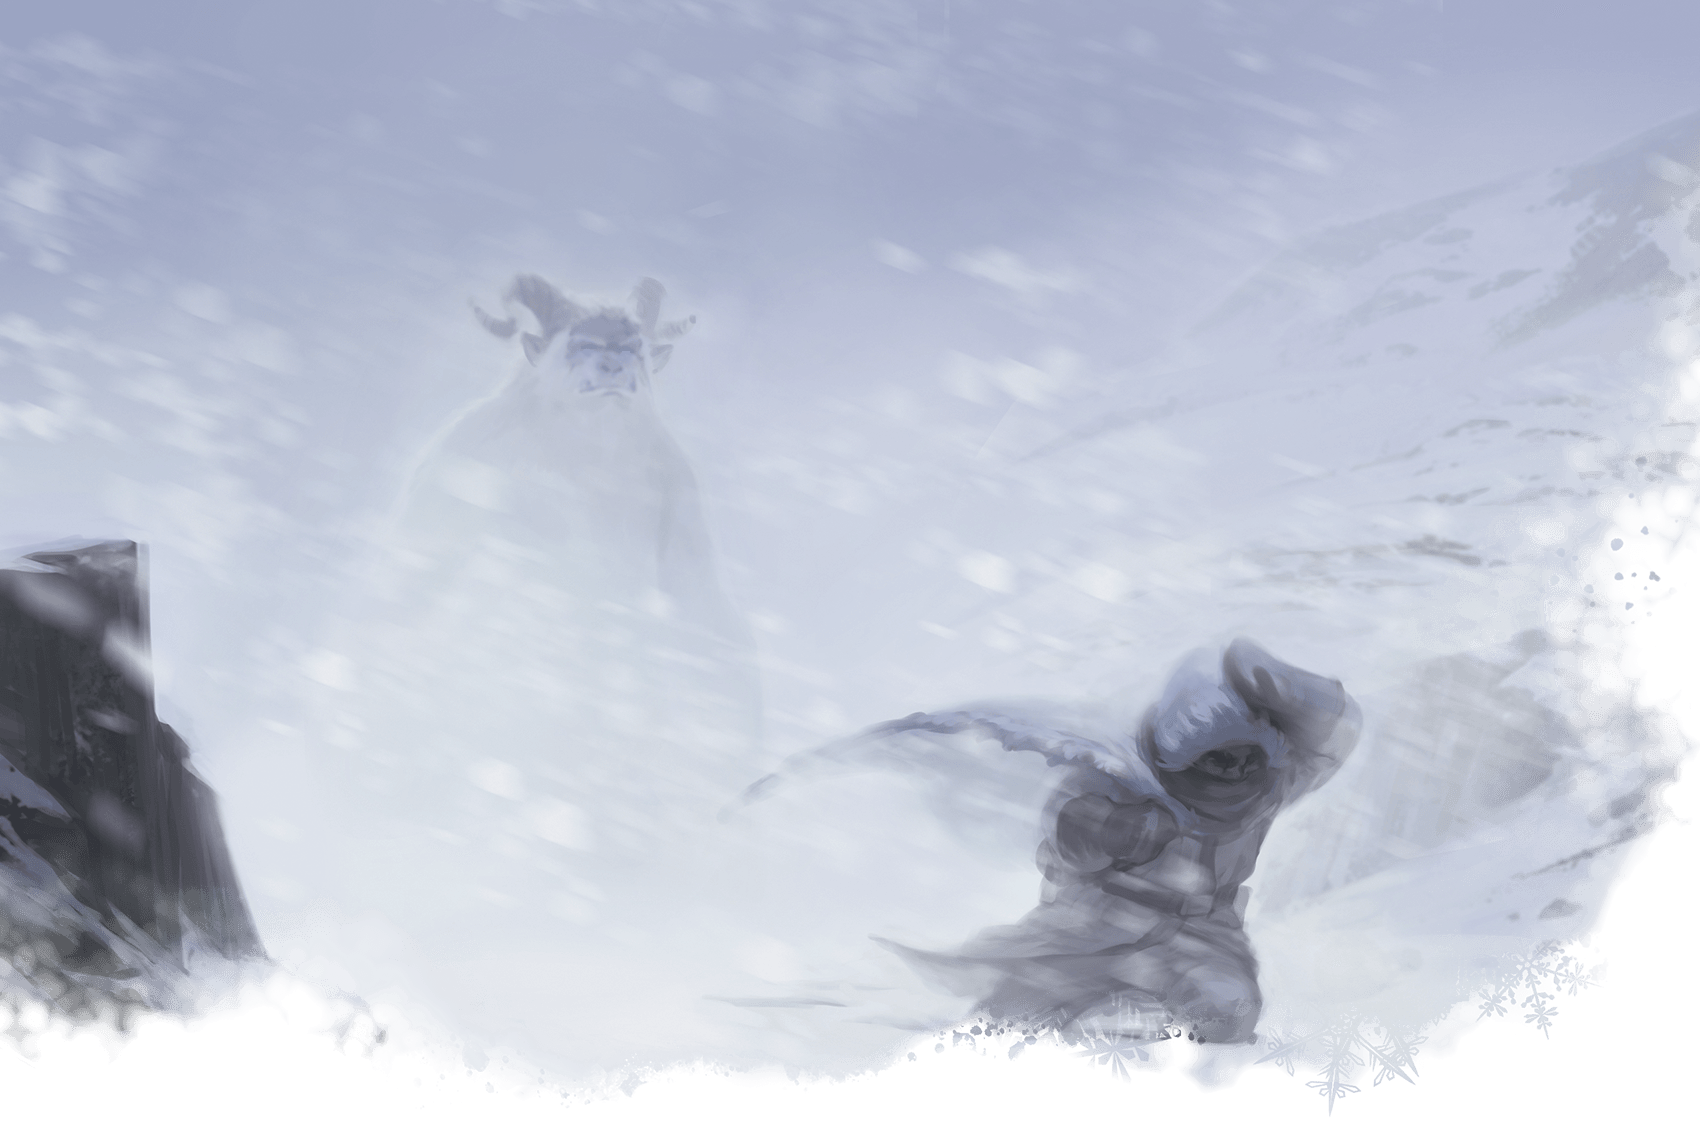 Голова дракона на снегу. Icewind Dale: Долина ледяных ветров. Долина ледяного ветра ДНД. Долина ледяных ветров ДНД. ДНД 5 Долина ледяного ветра.